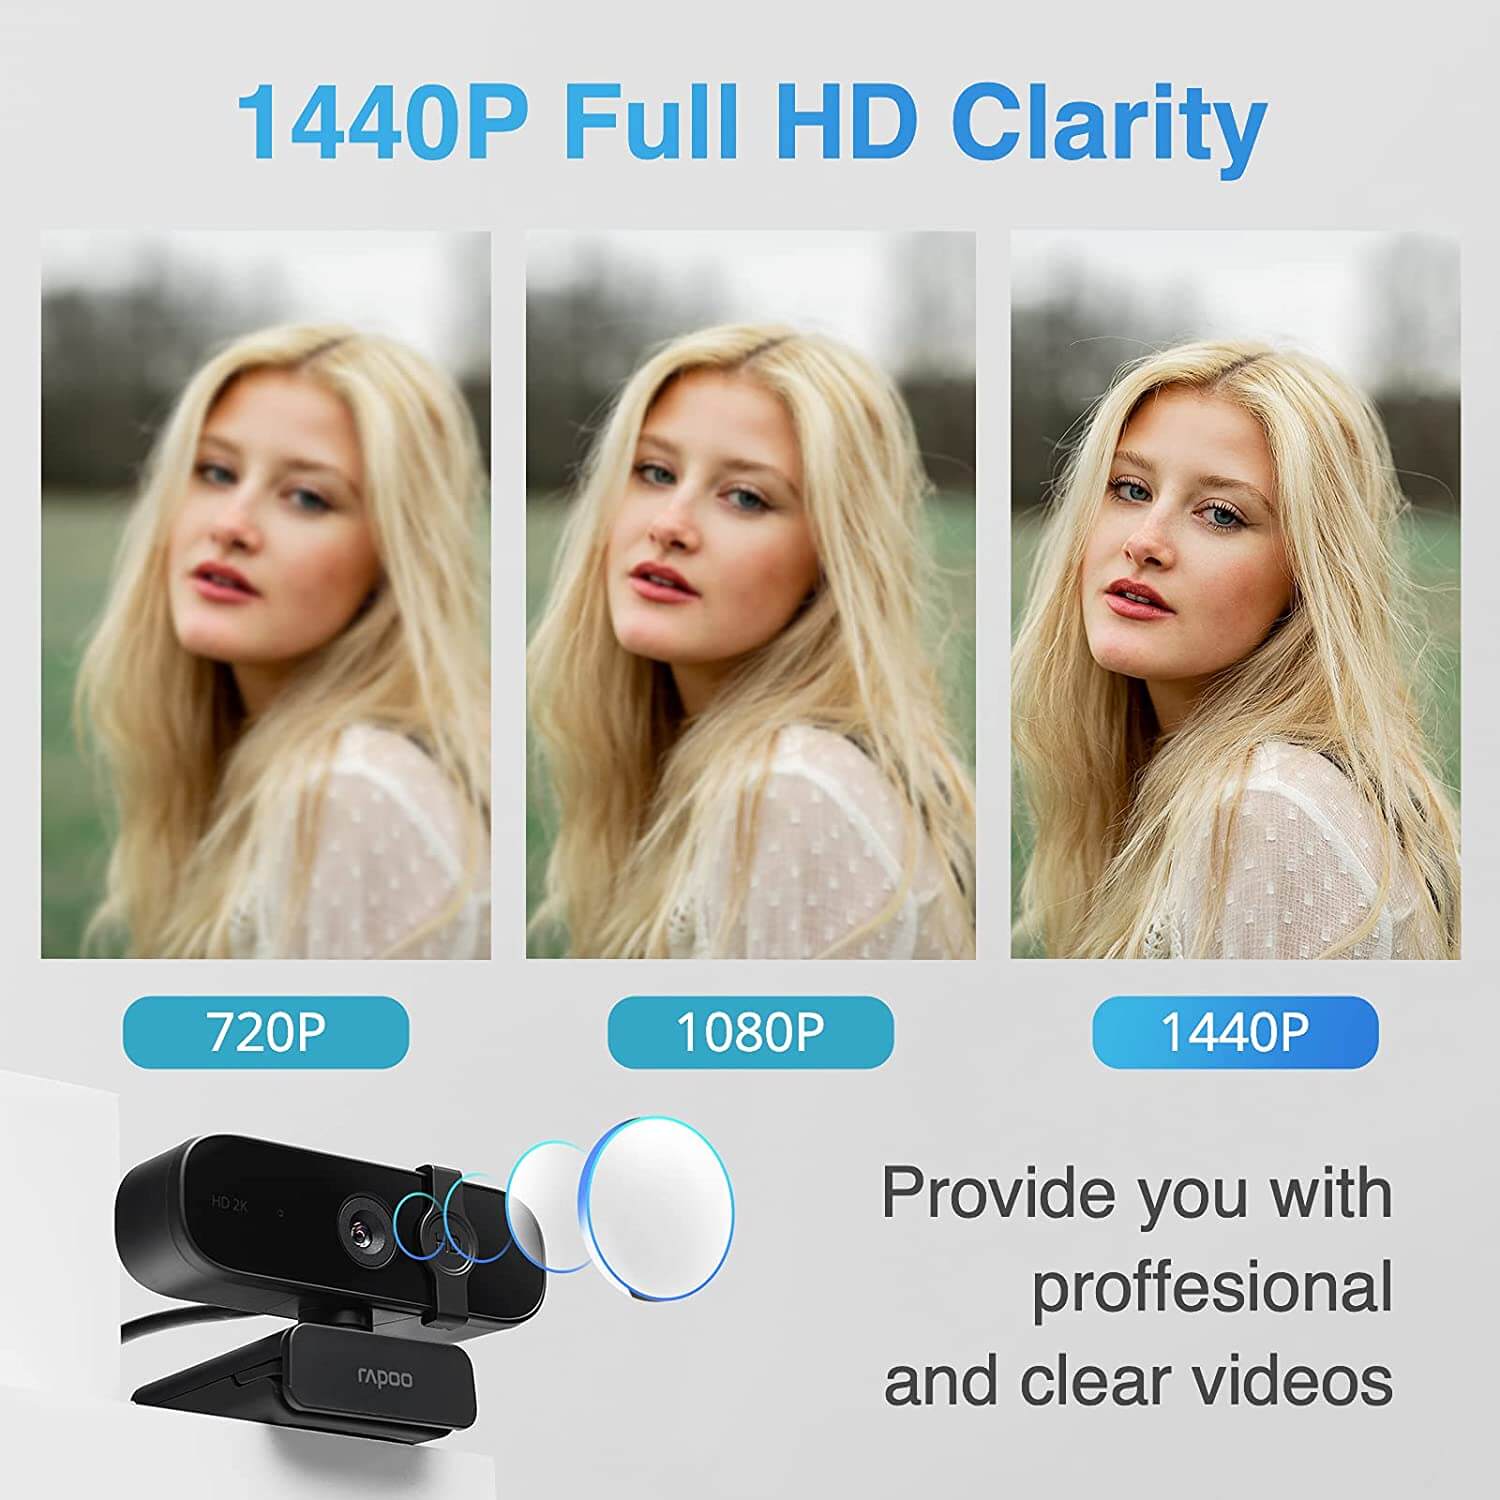 RAPOO C280 Full HD 2K USB Webcam